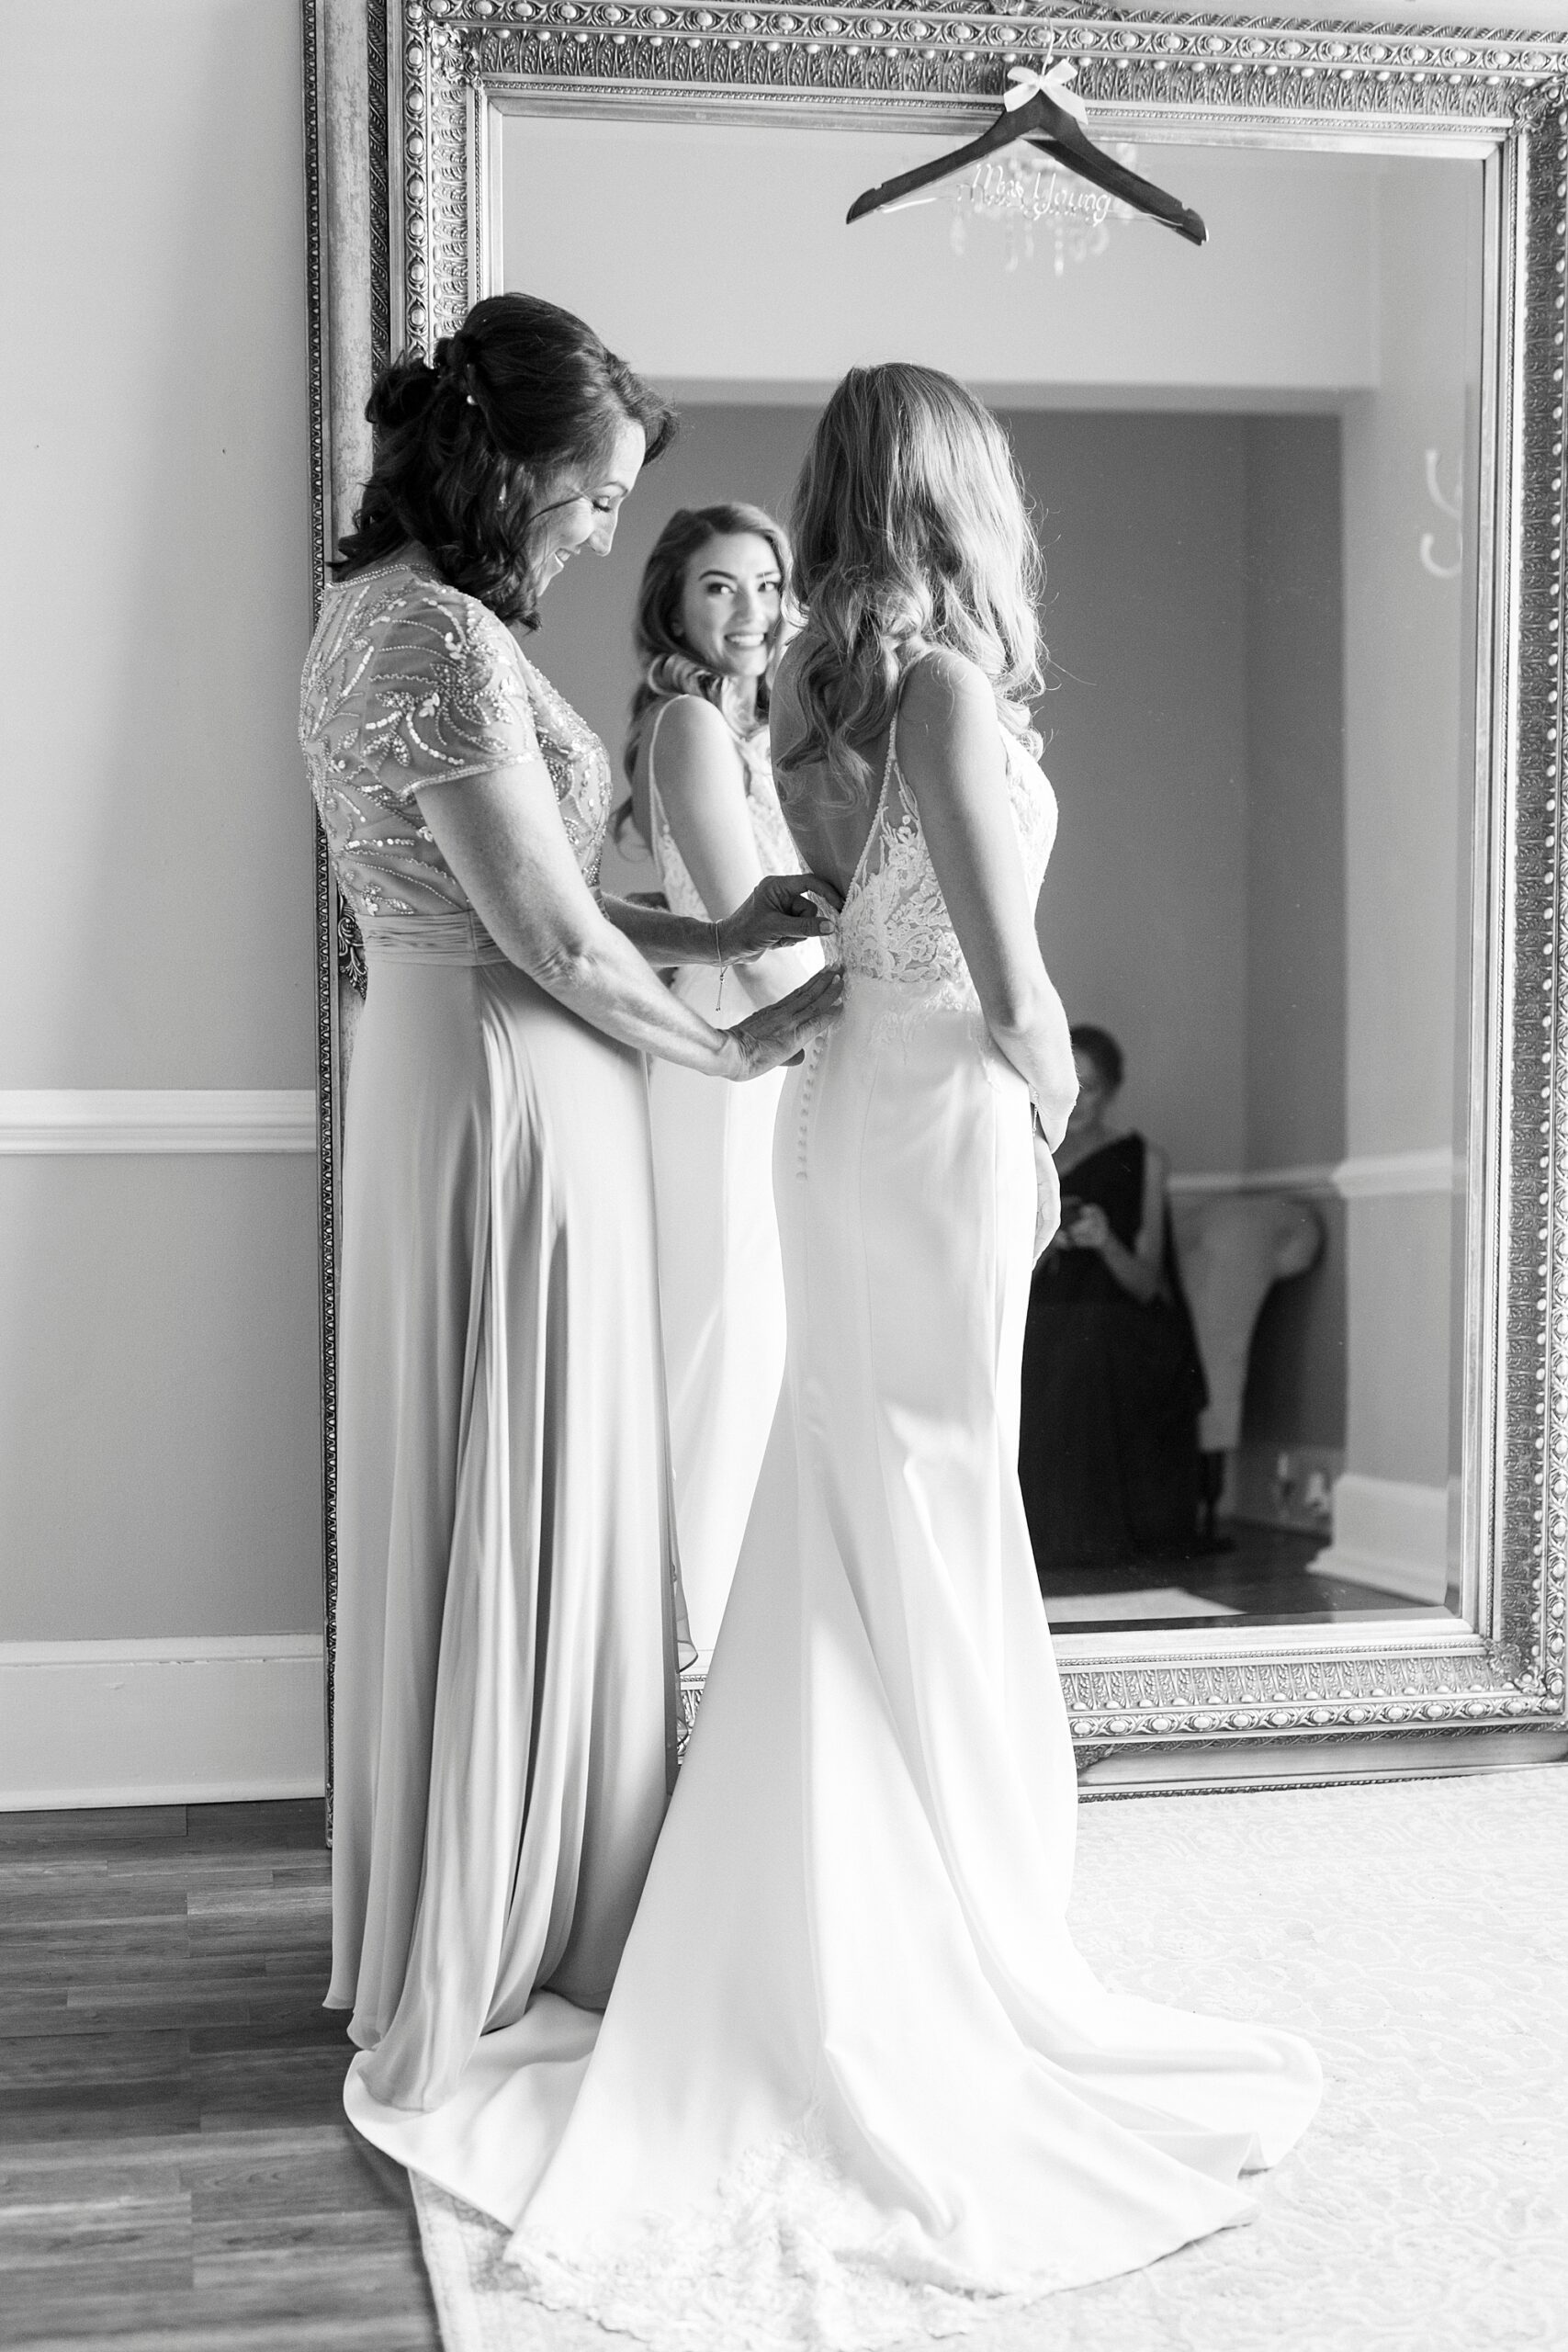 woman helps bride into wedding dress looking into mirror reflection 